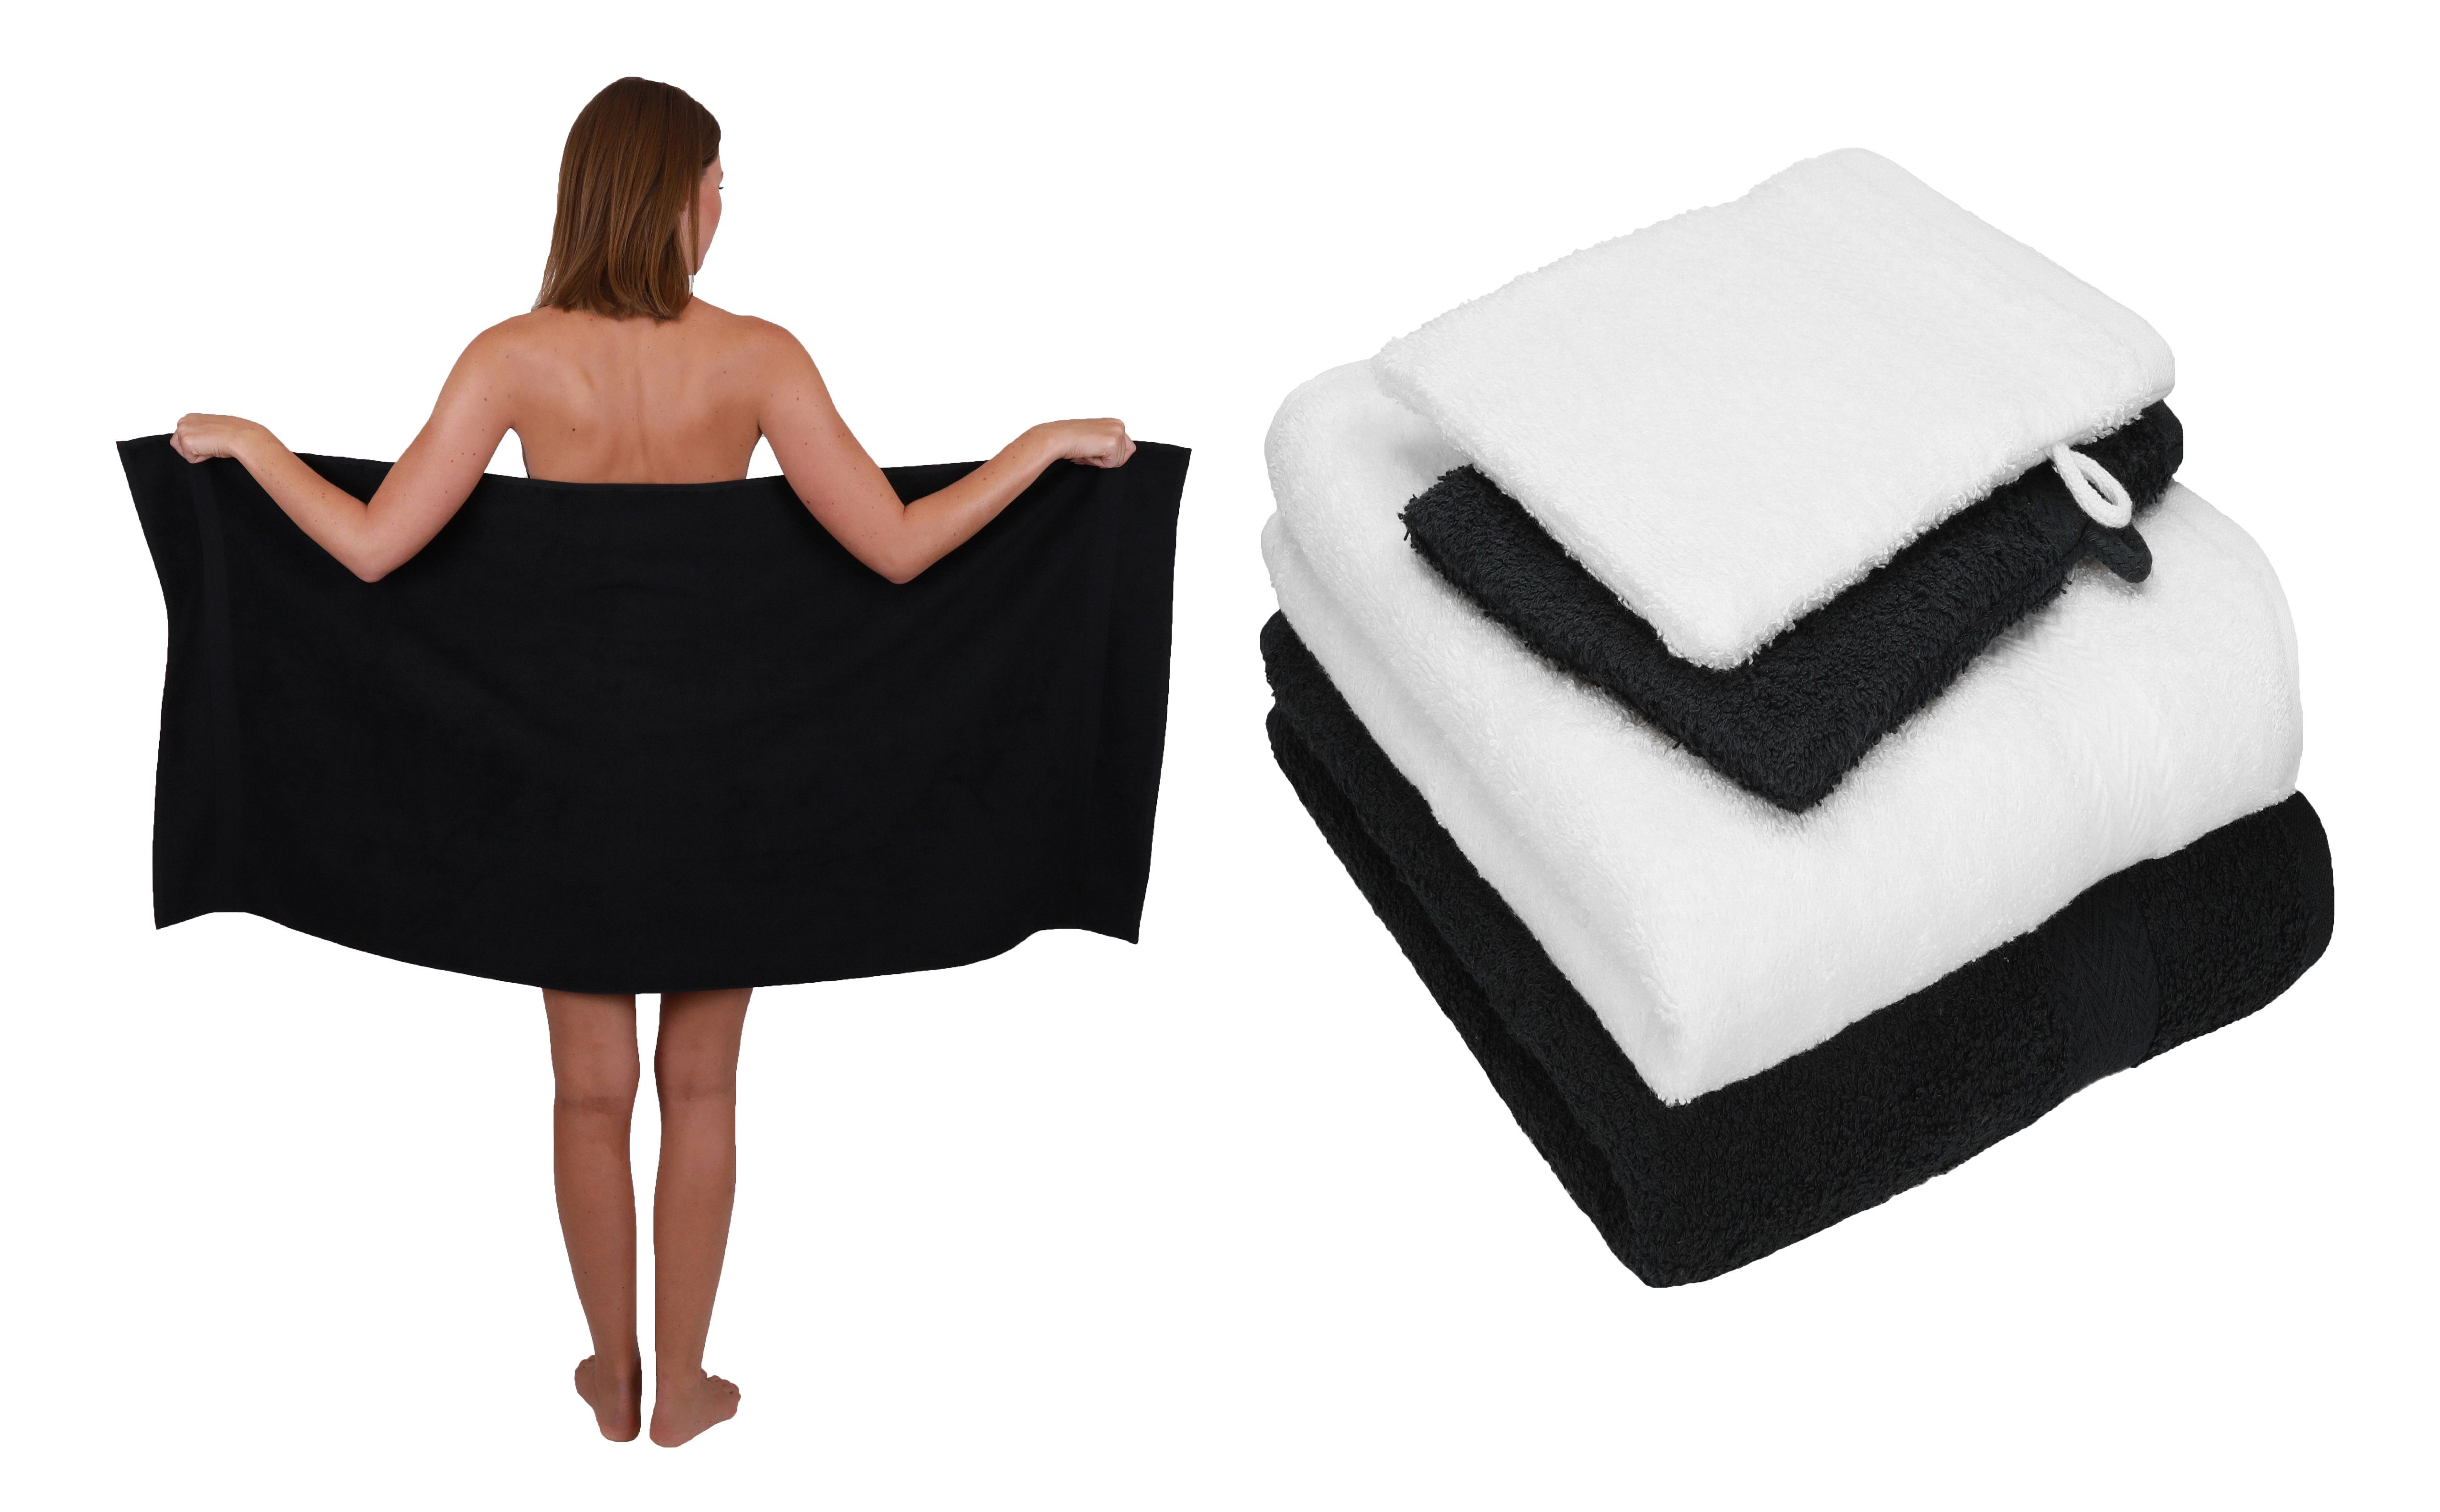 Betz Handtuch Set 5 TLG. Handtuch Set Single Pack 100% Baumwolle 1 Duschtuch 2 Handtücher 2 Waschhandschuhe, 100% Baumwolle schwarz-weiß